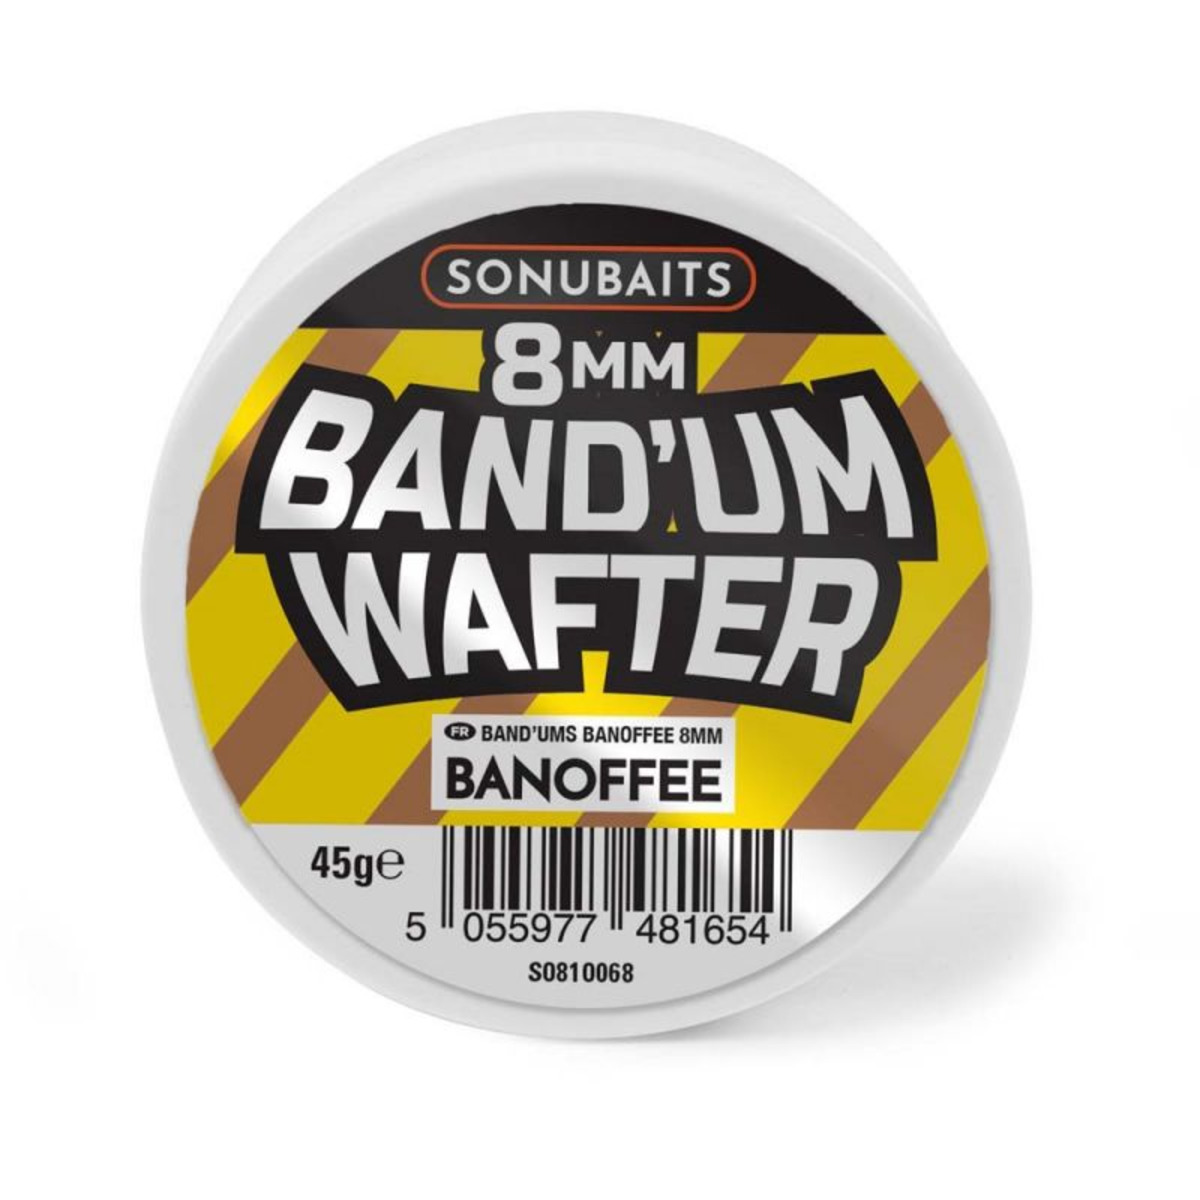 Sonubaits Band’um Wafters - 8 mm - Banoffee